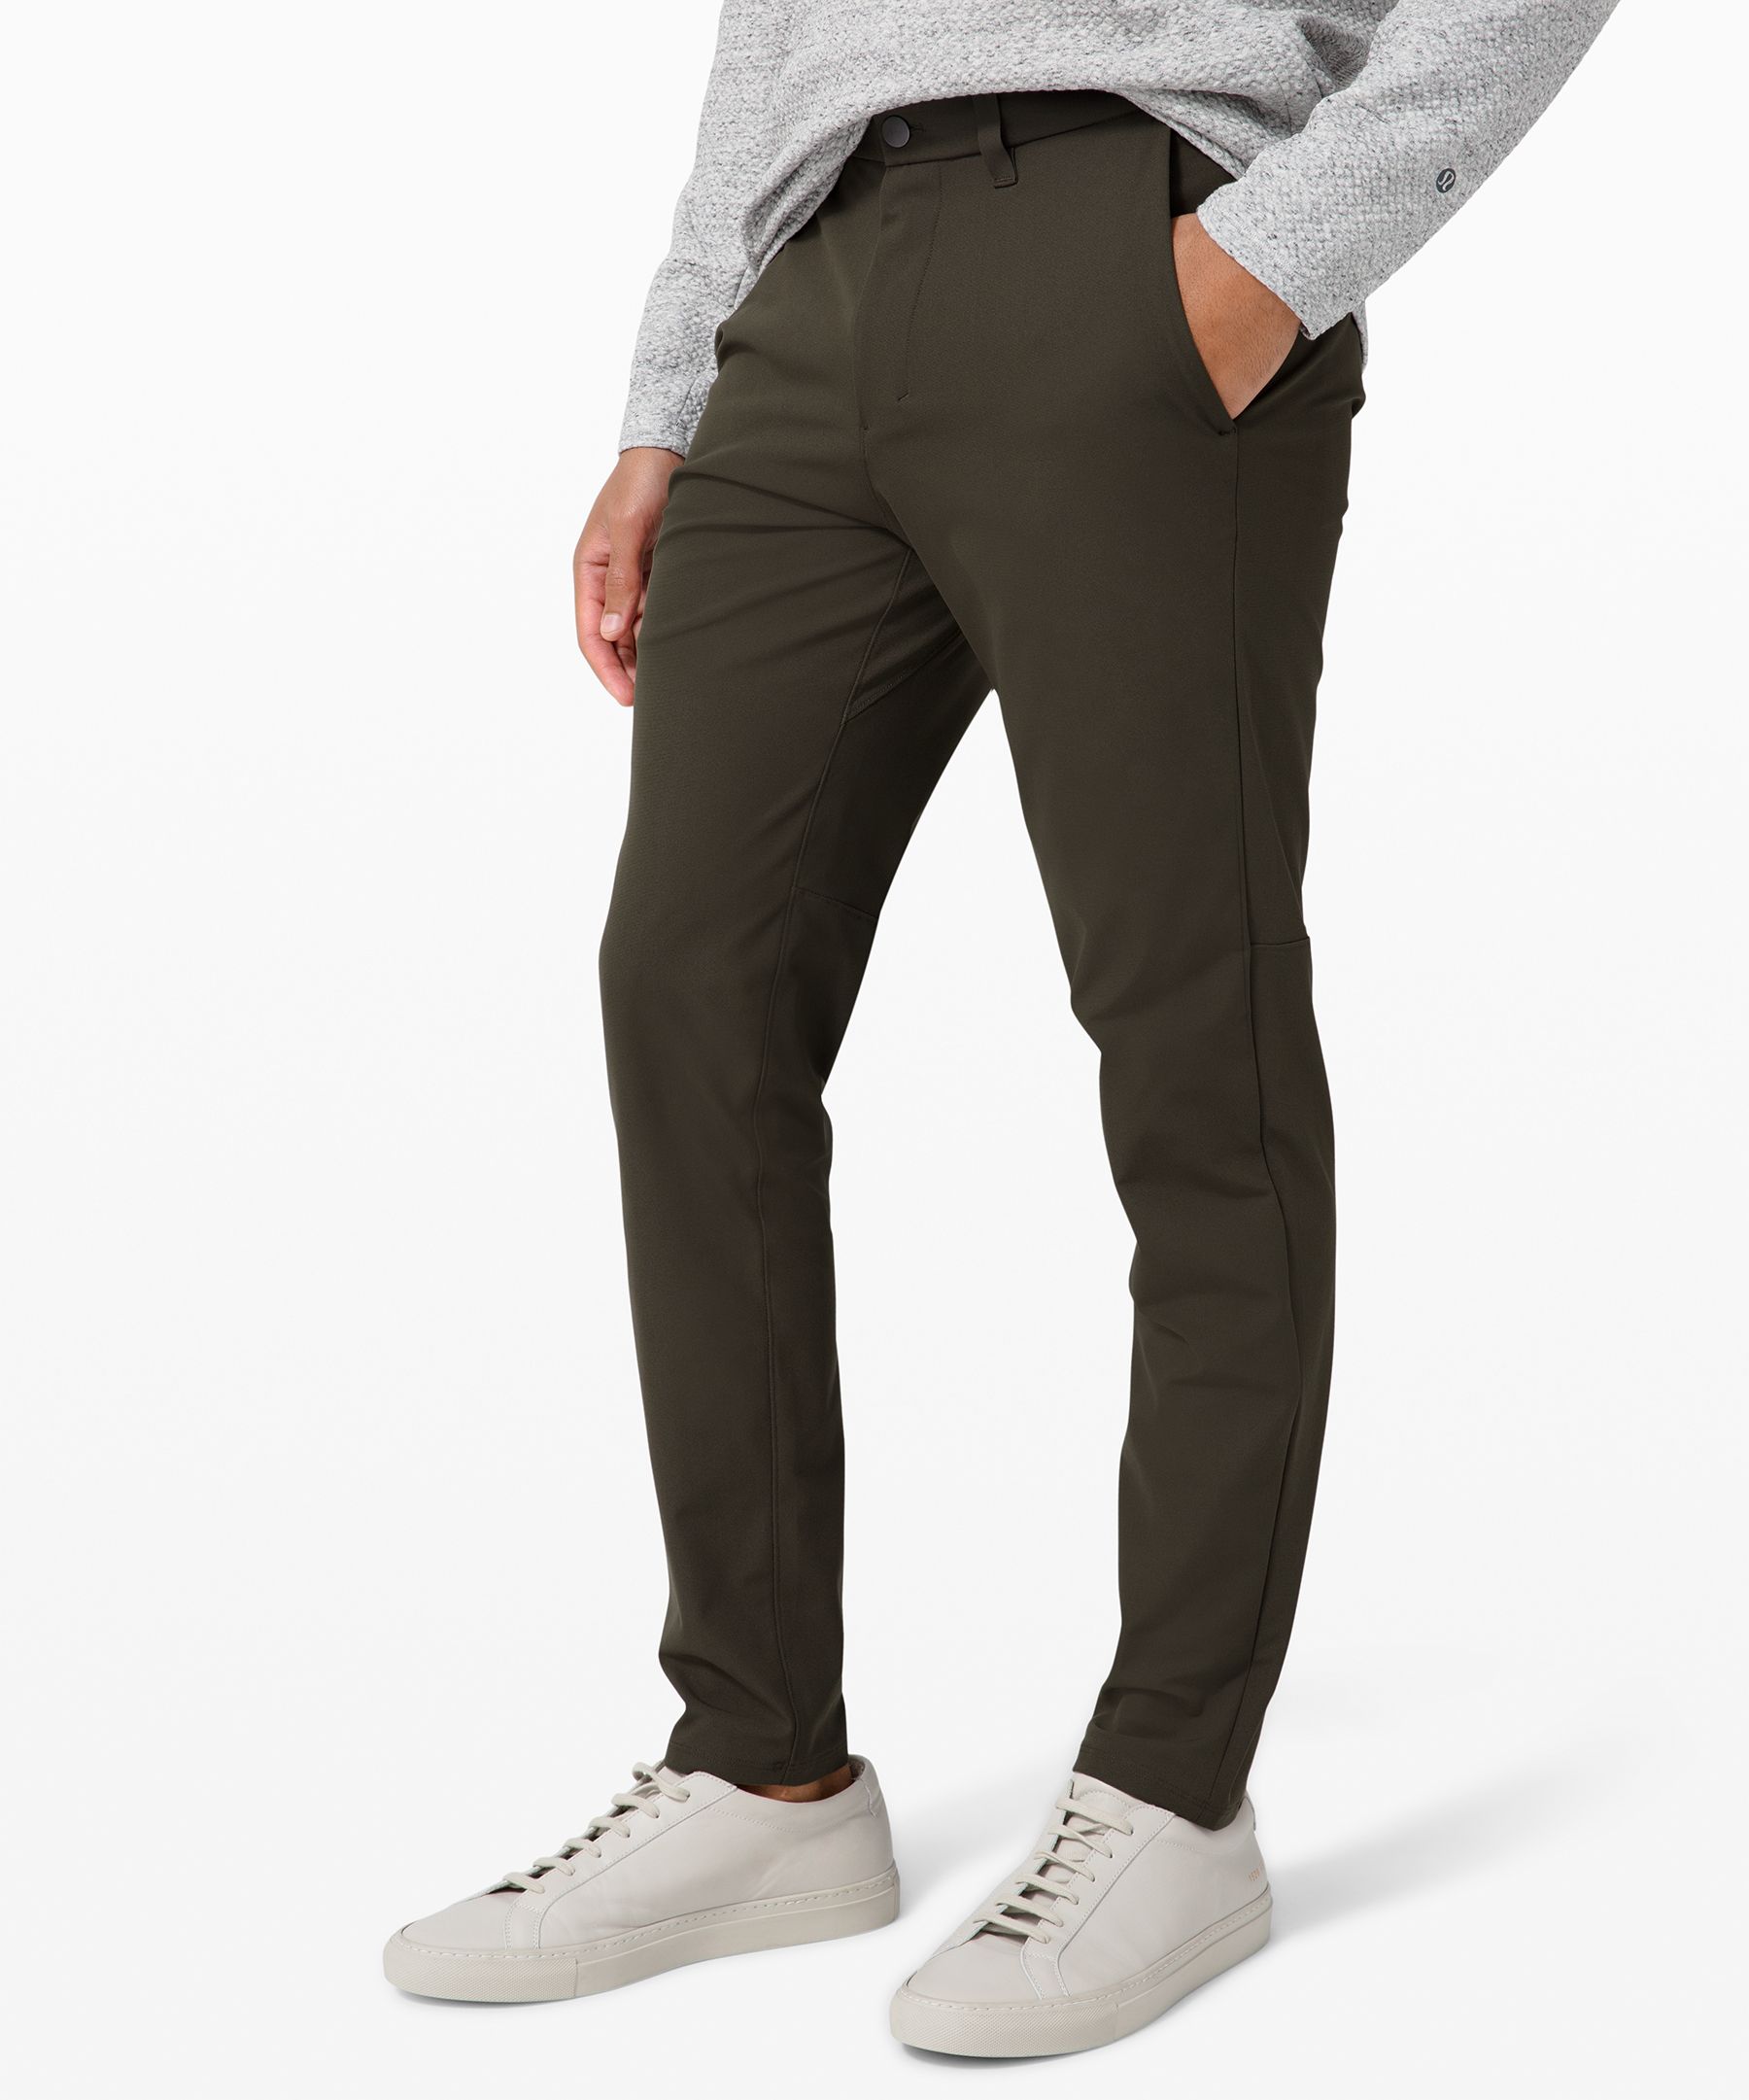 Lululemon Commission Slim-Fit Pants 30 Warpstreme - ShopStyle